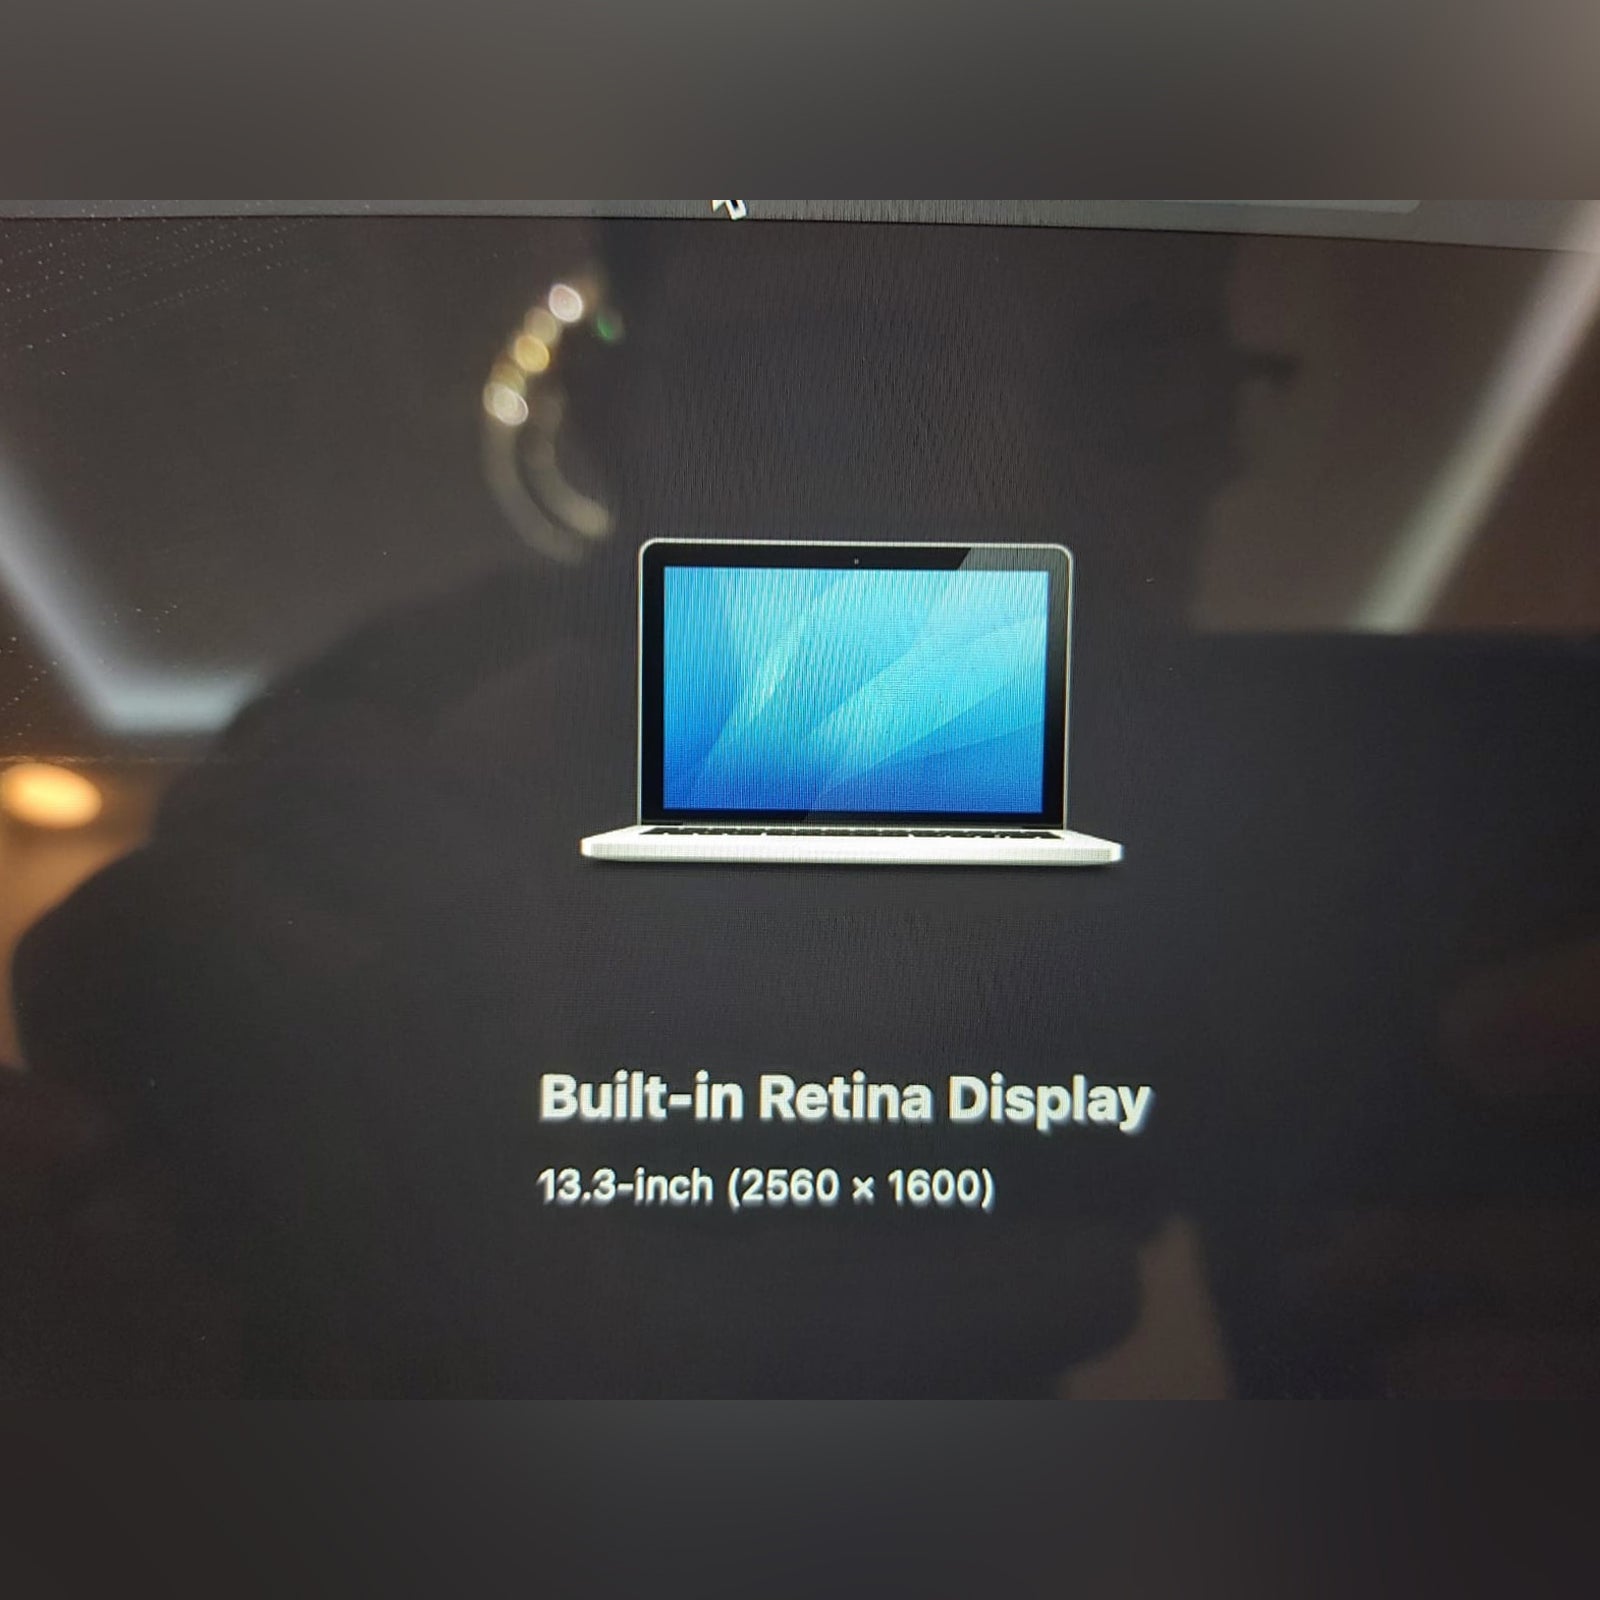 Apple MacBook Pro 13 i5 Laptop (Used Just Like New)